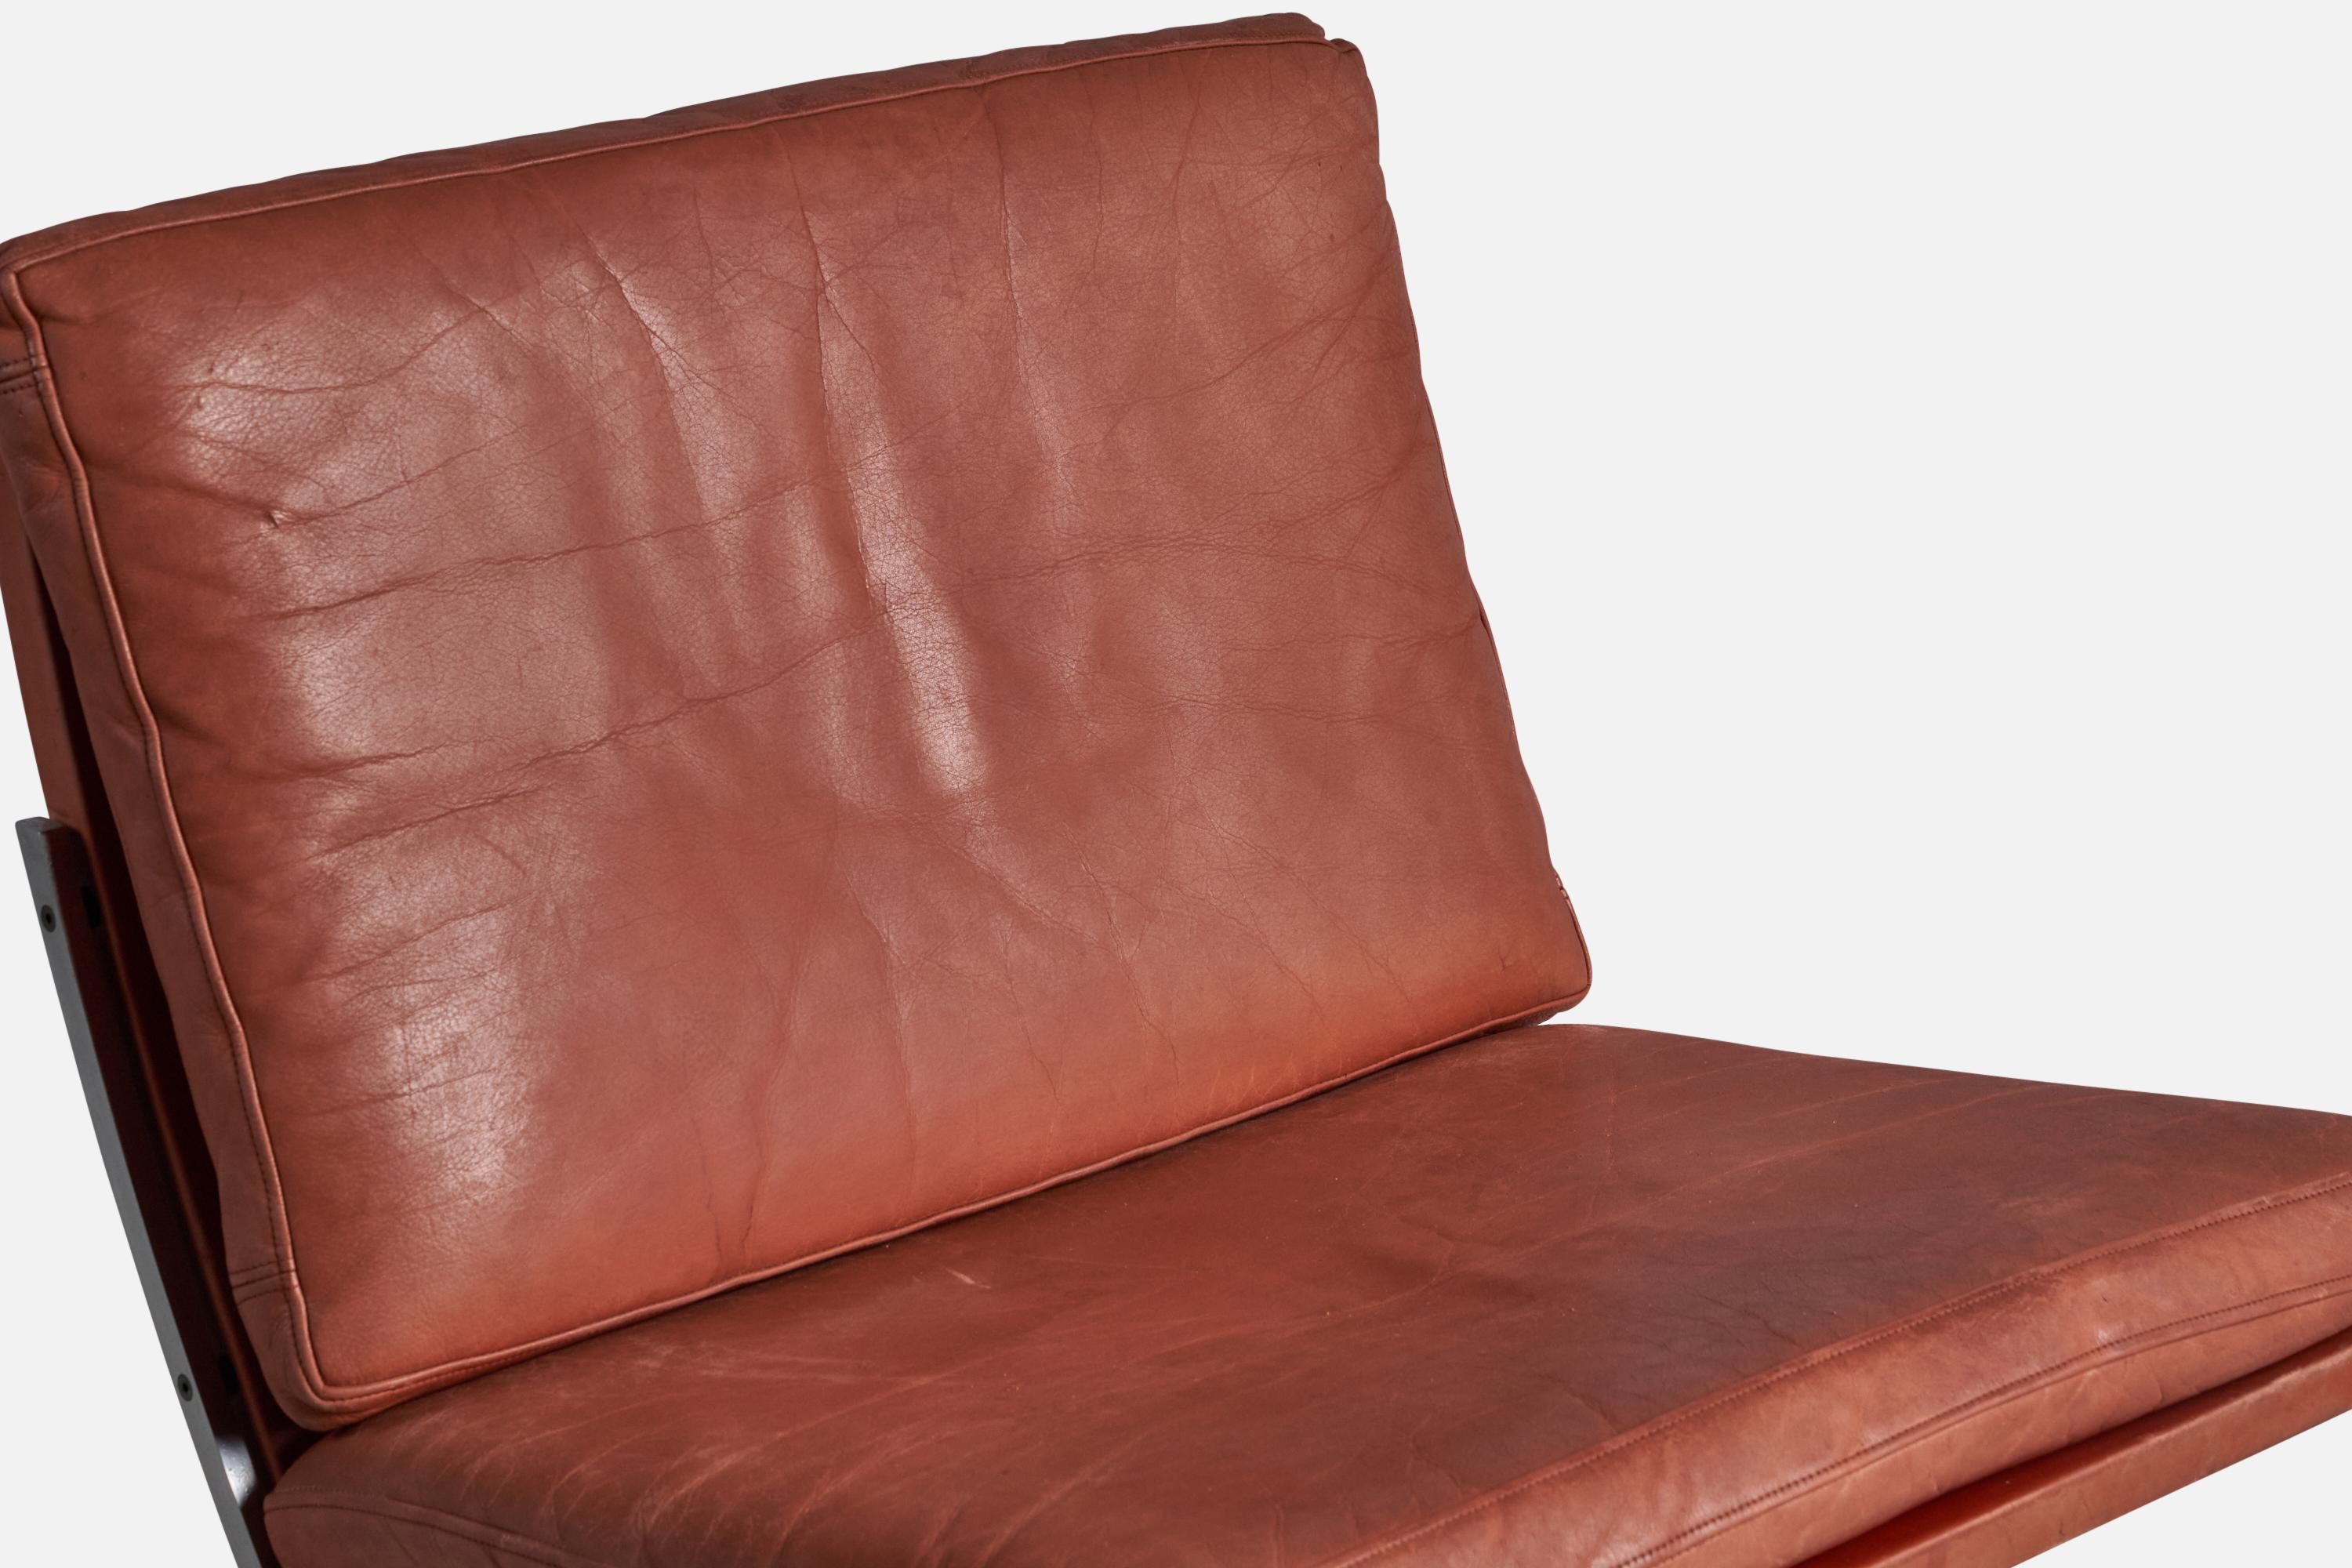 Preben Fabricius & Jørgen Kastholm, Lounge Chairs, Leather, Steel, Denmark 1960s For Sale 1